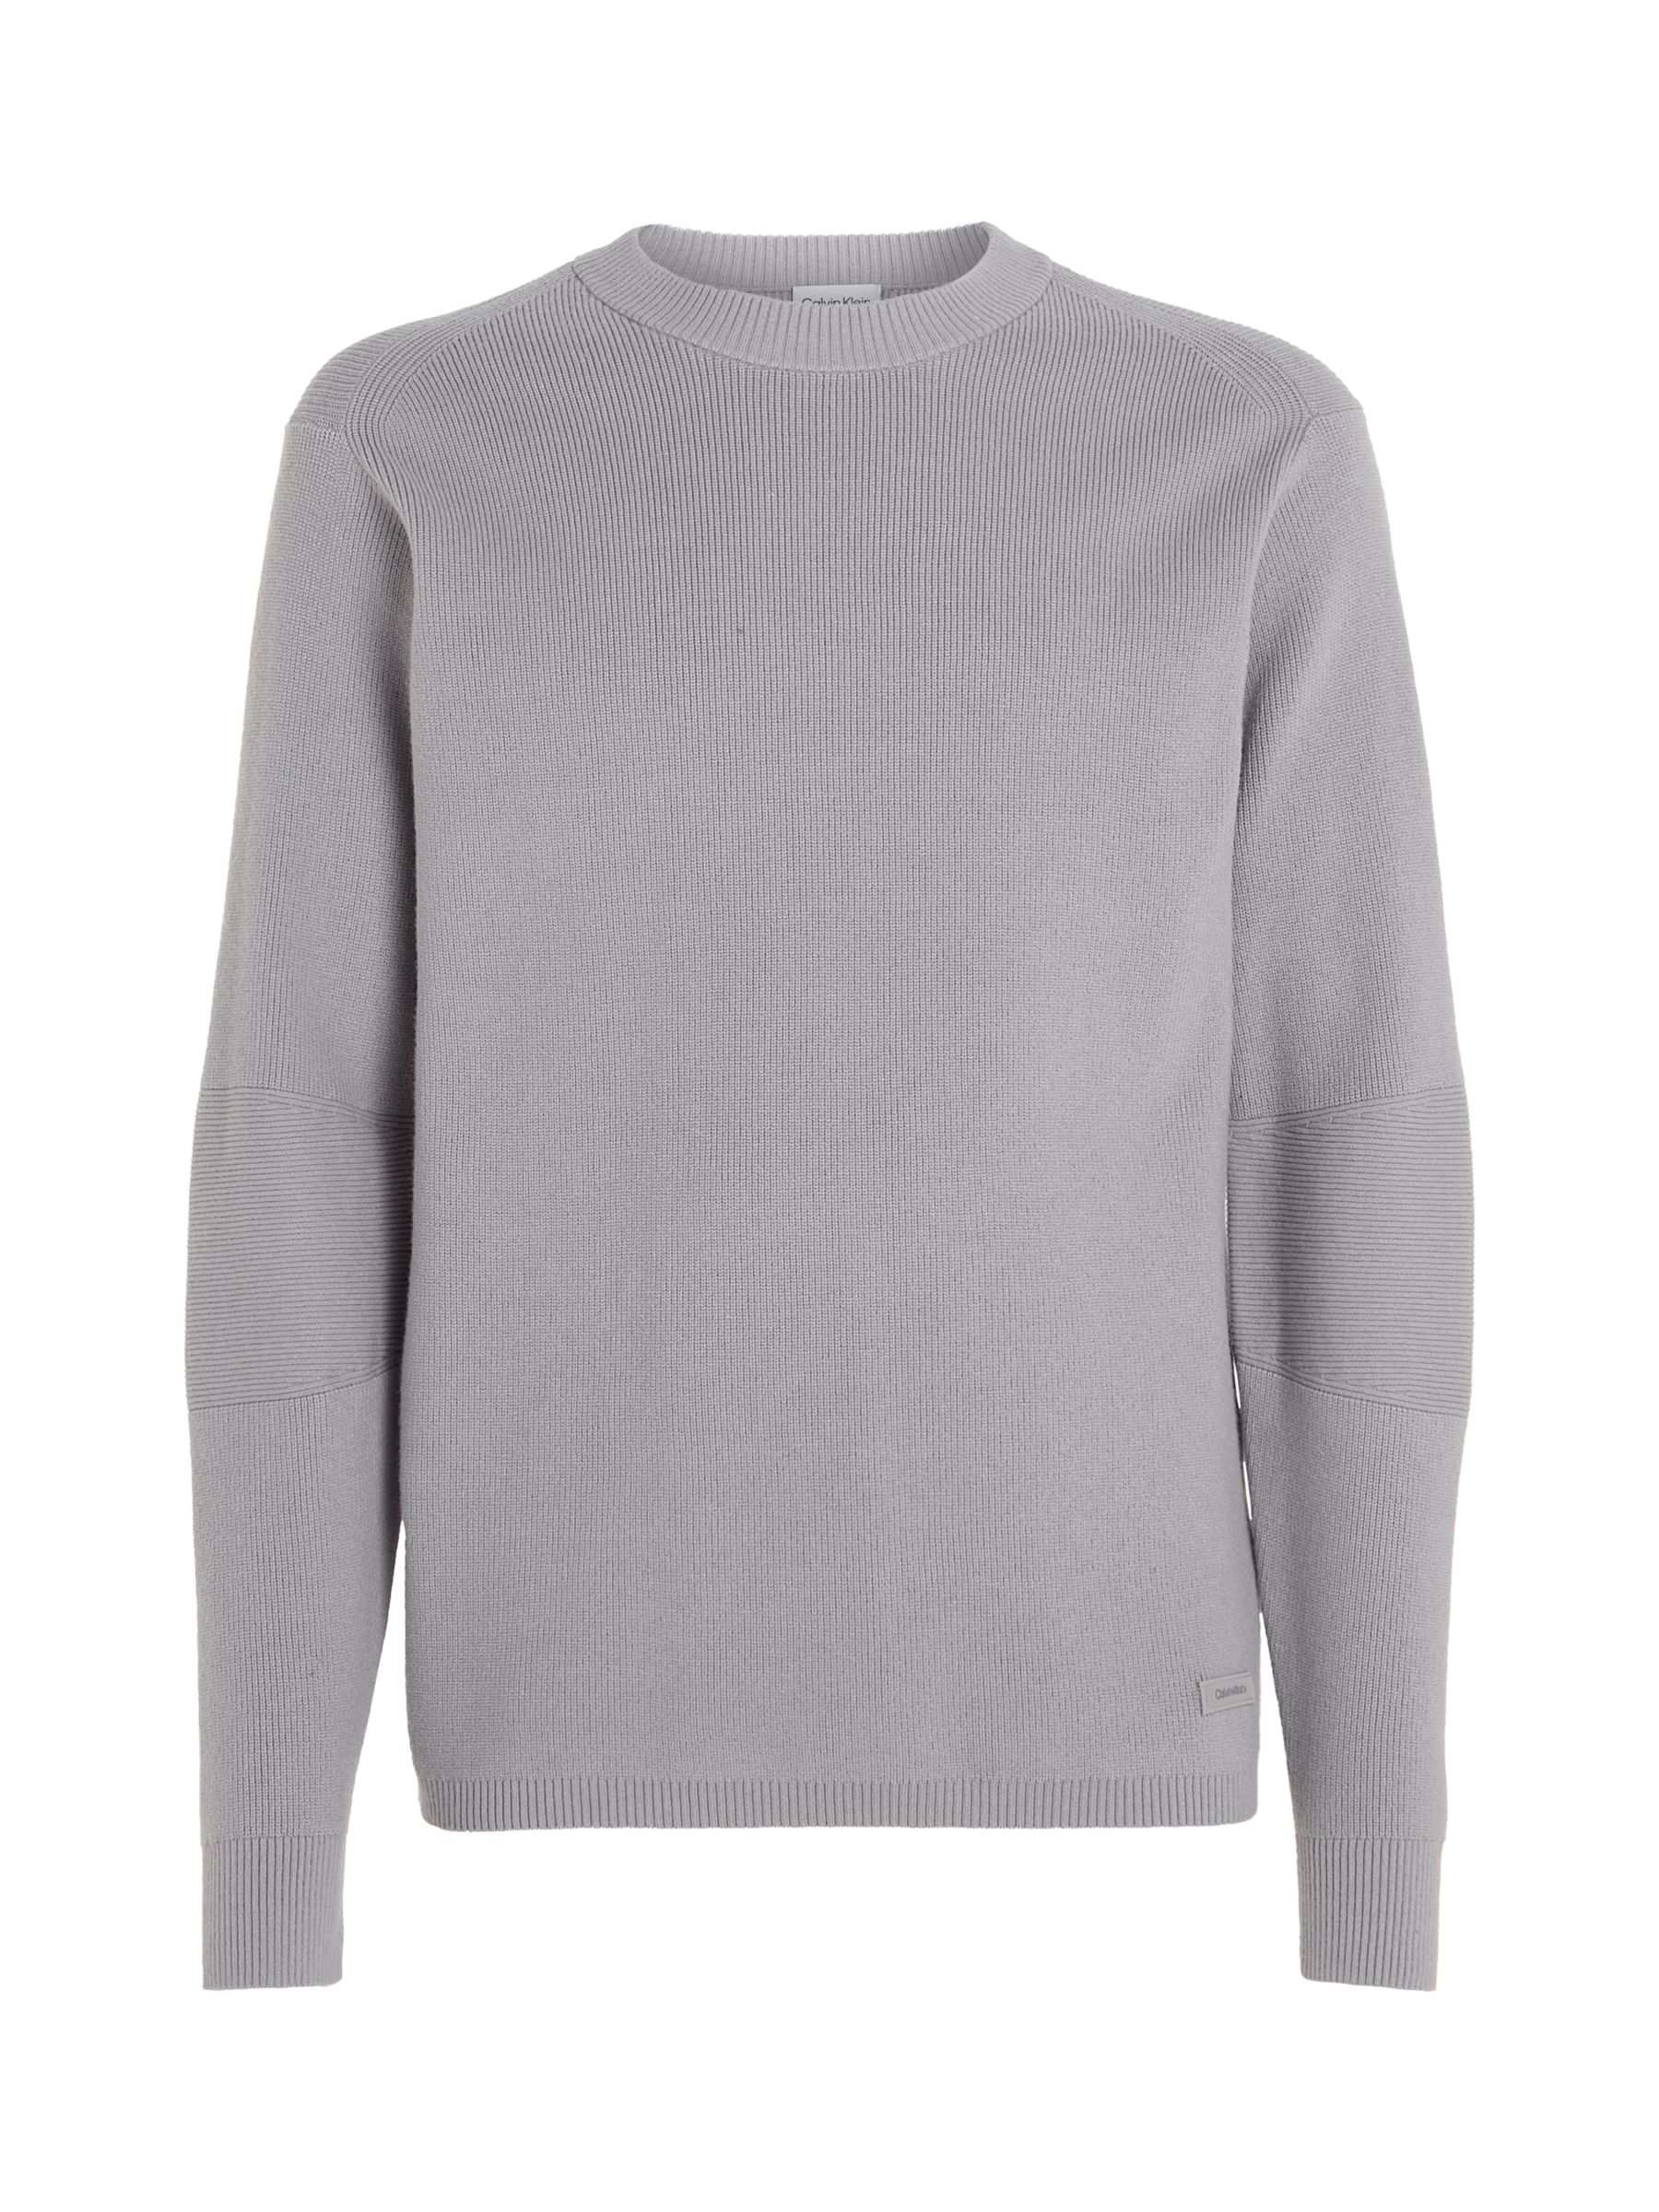 Buy Calvin Klein Knitted Regular Pullover Jumper, Silver Online at johnlewis.com